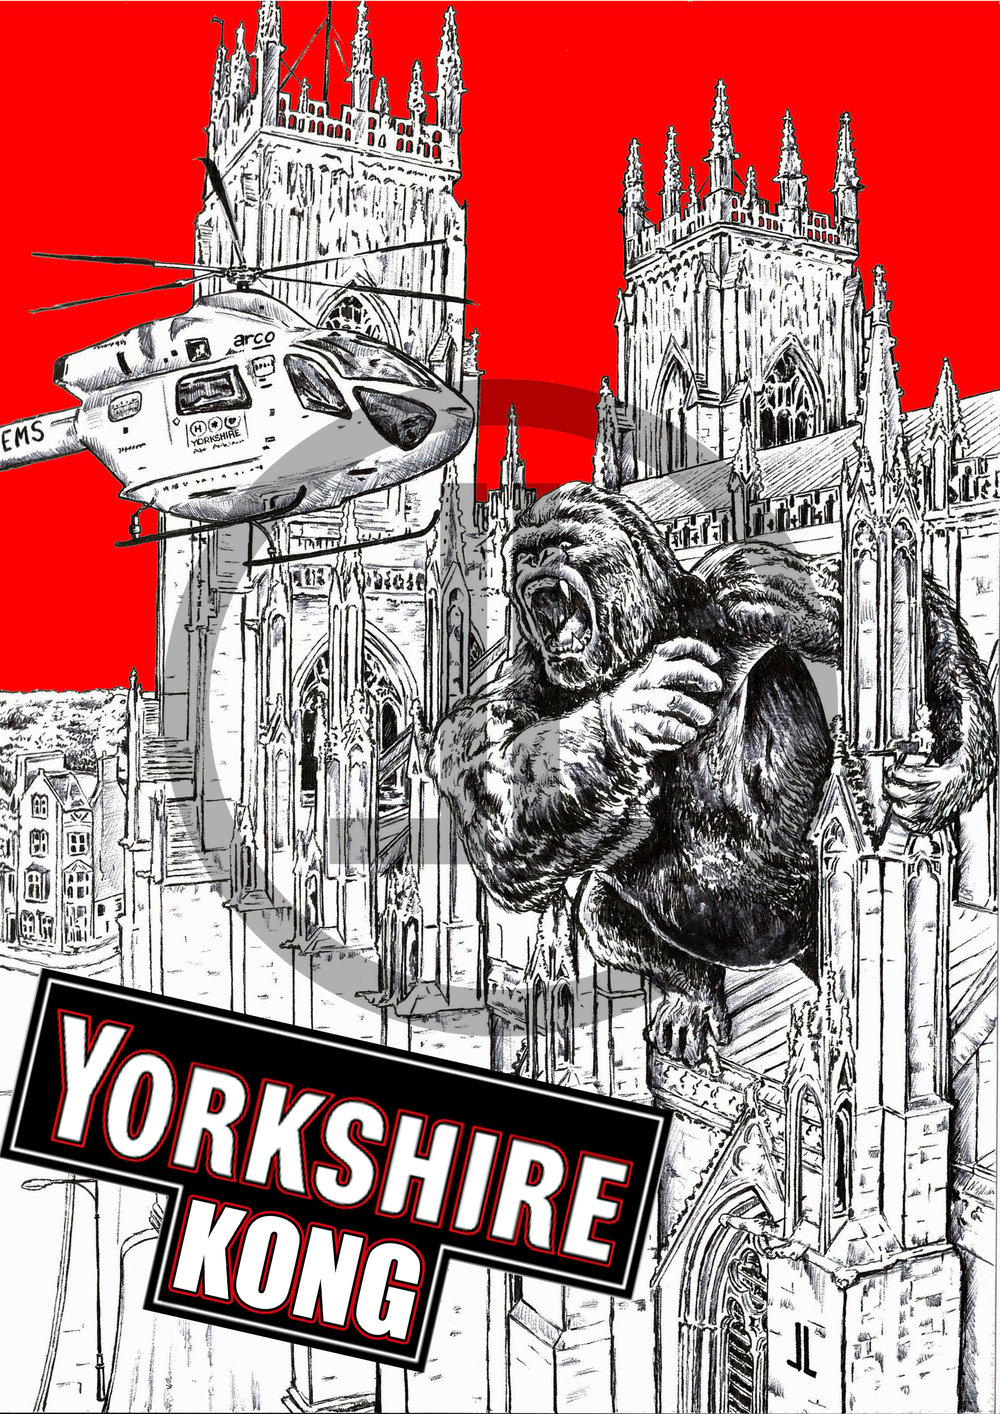 'Yorkshire Kong' - York